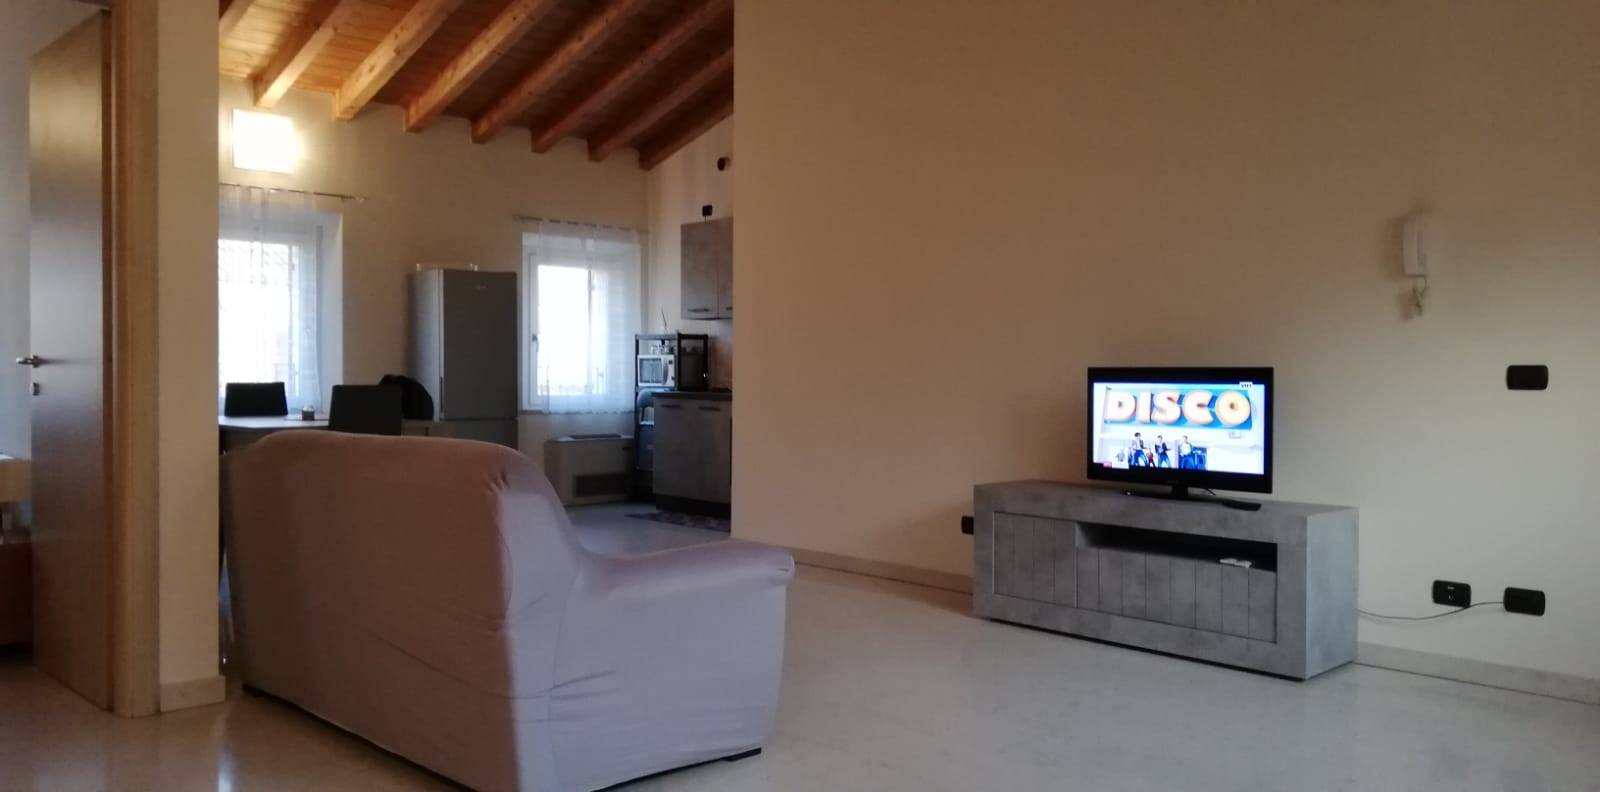 Appartamento indipendente in affitto a Nogara Verona Centro